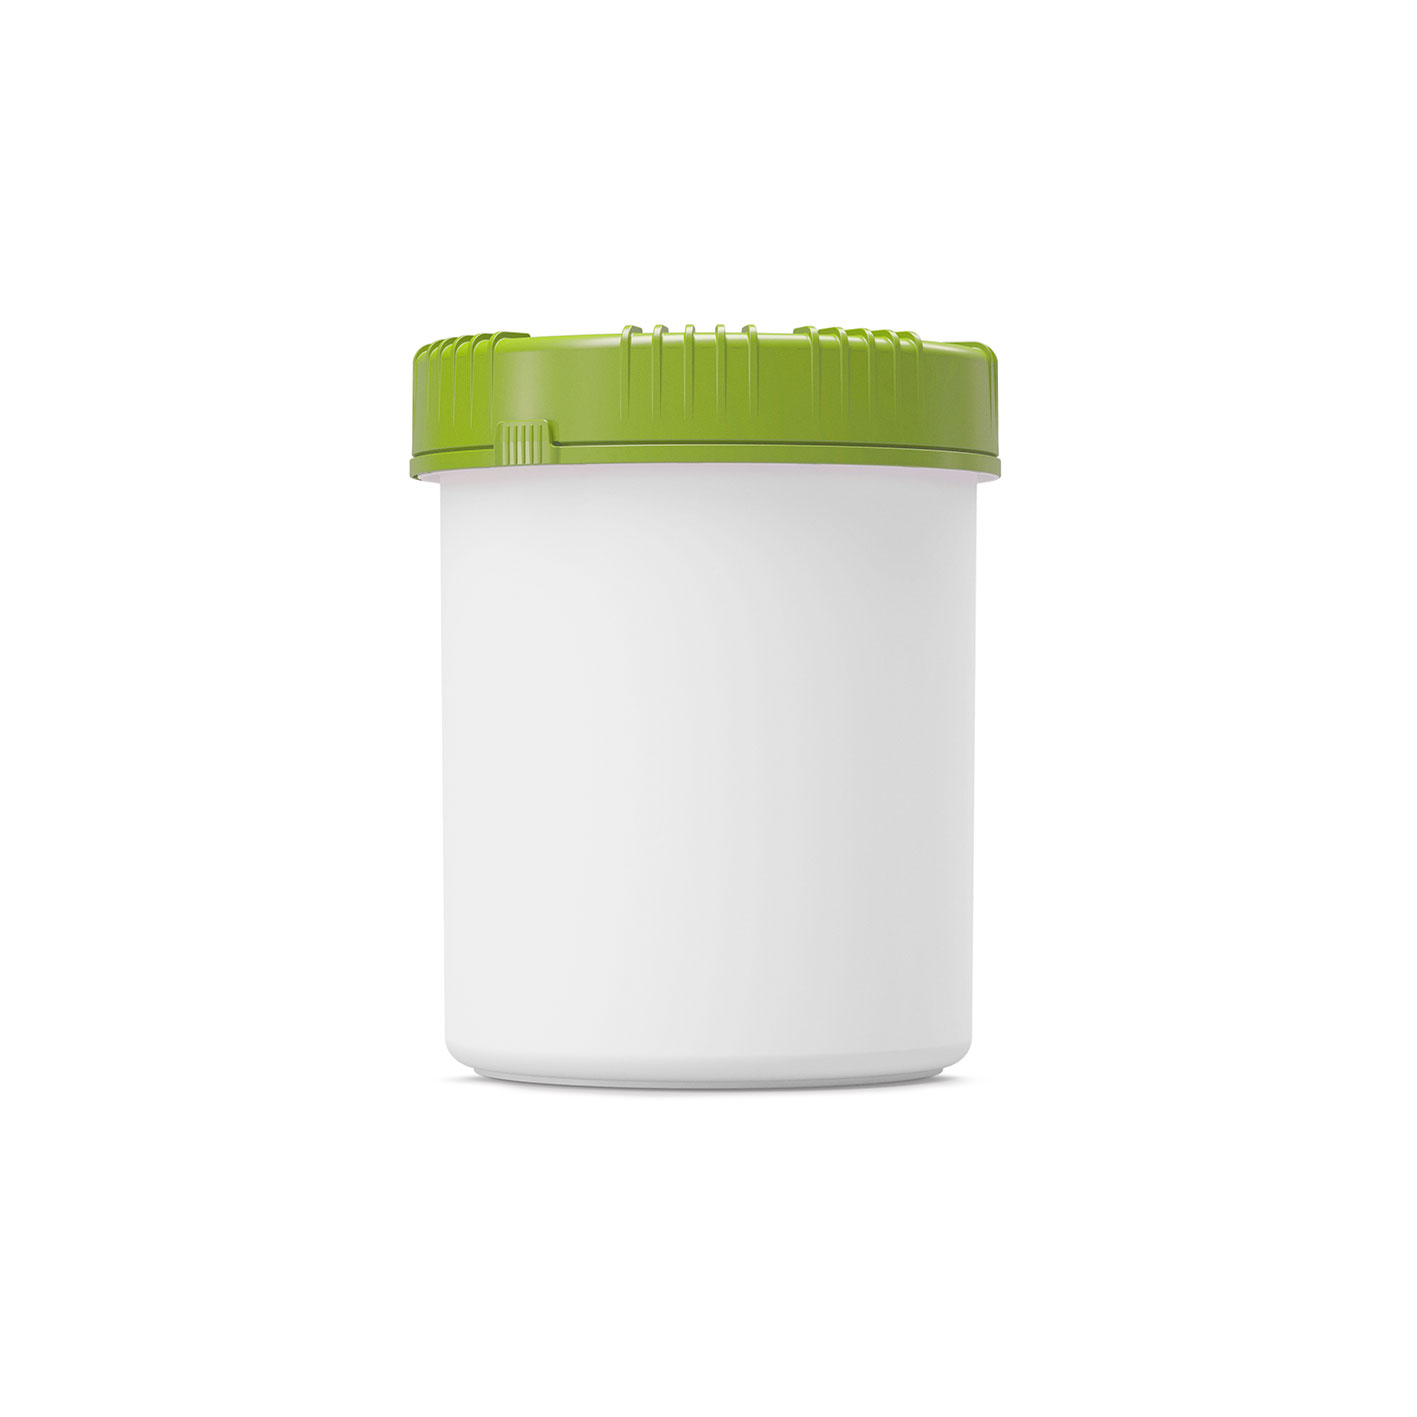 1500 ml Biobased Packo Jar